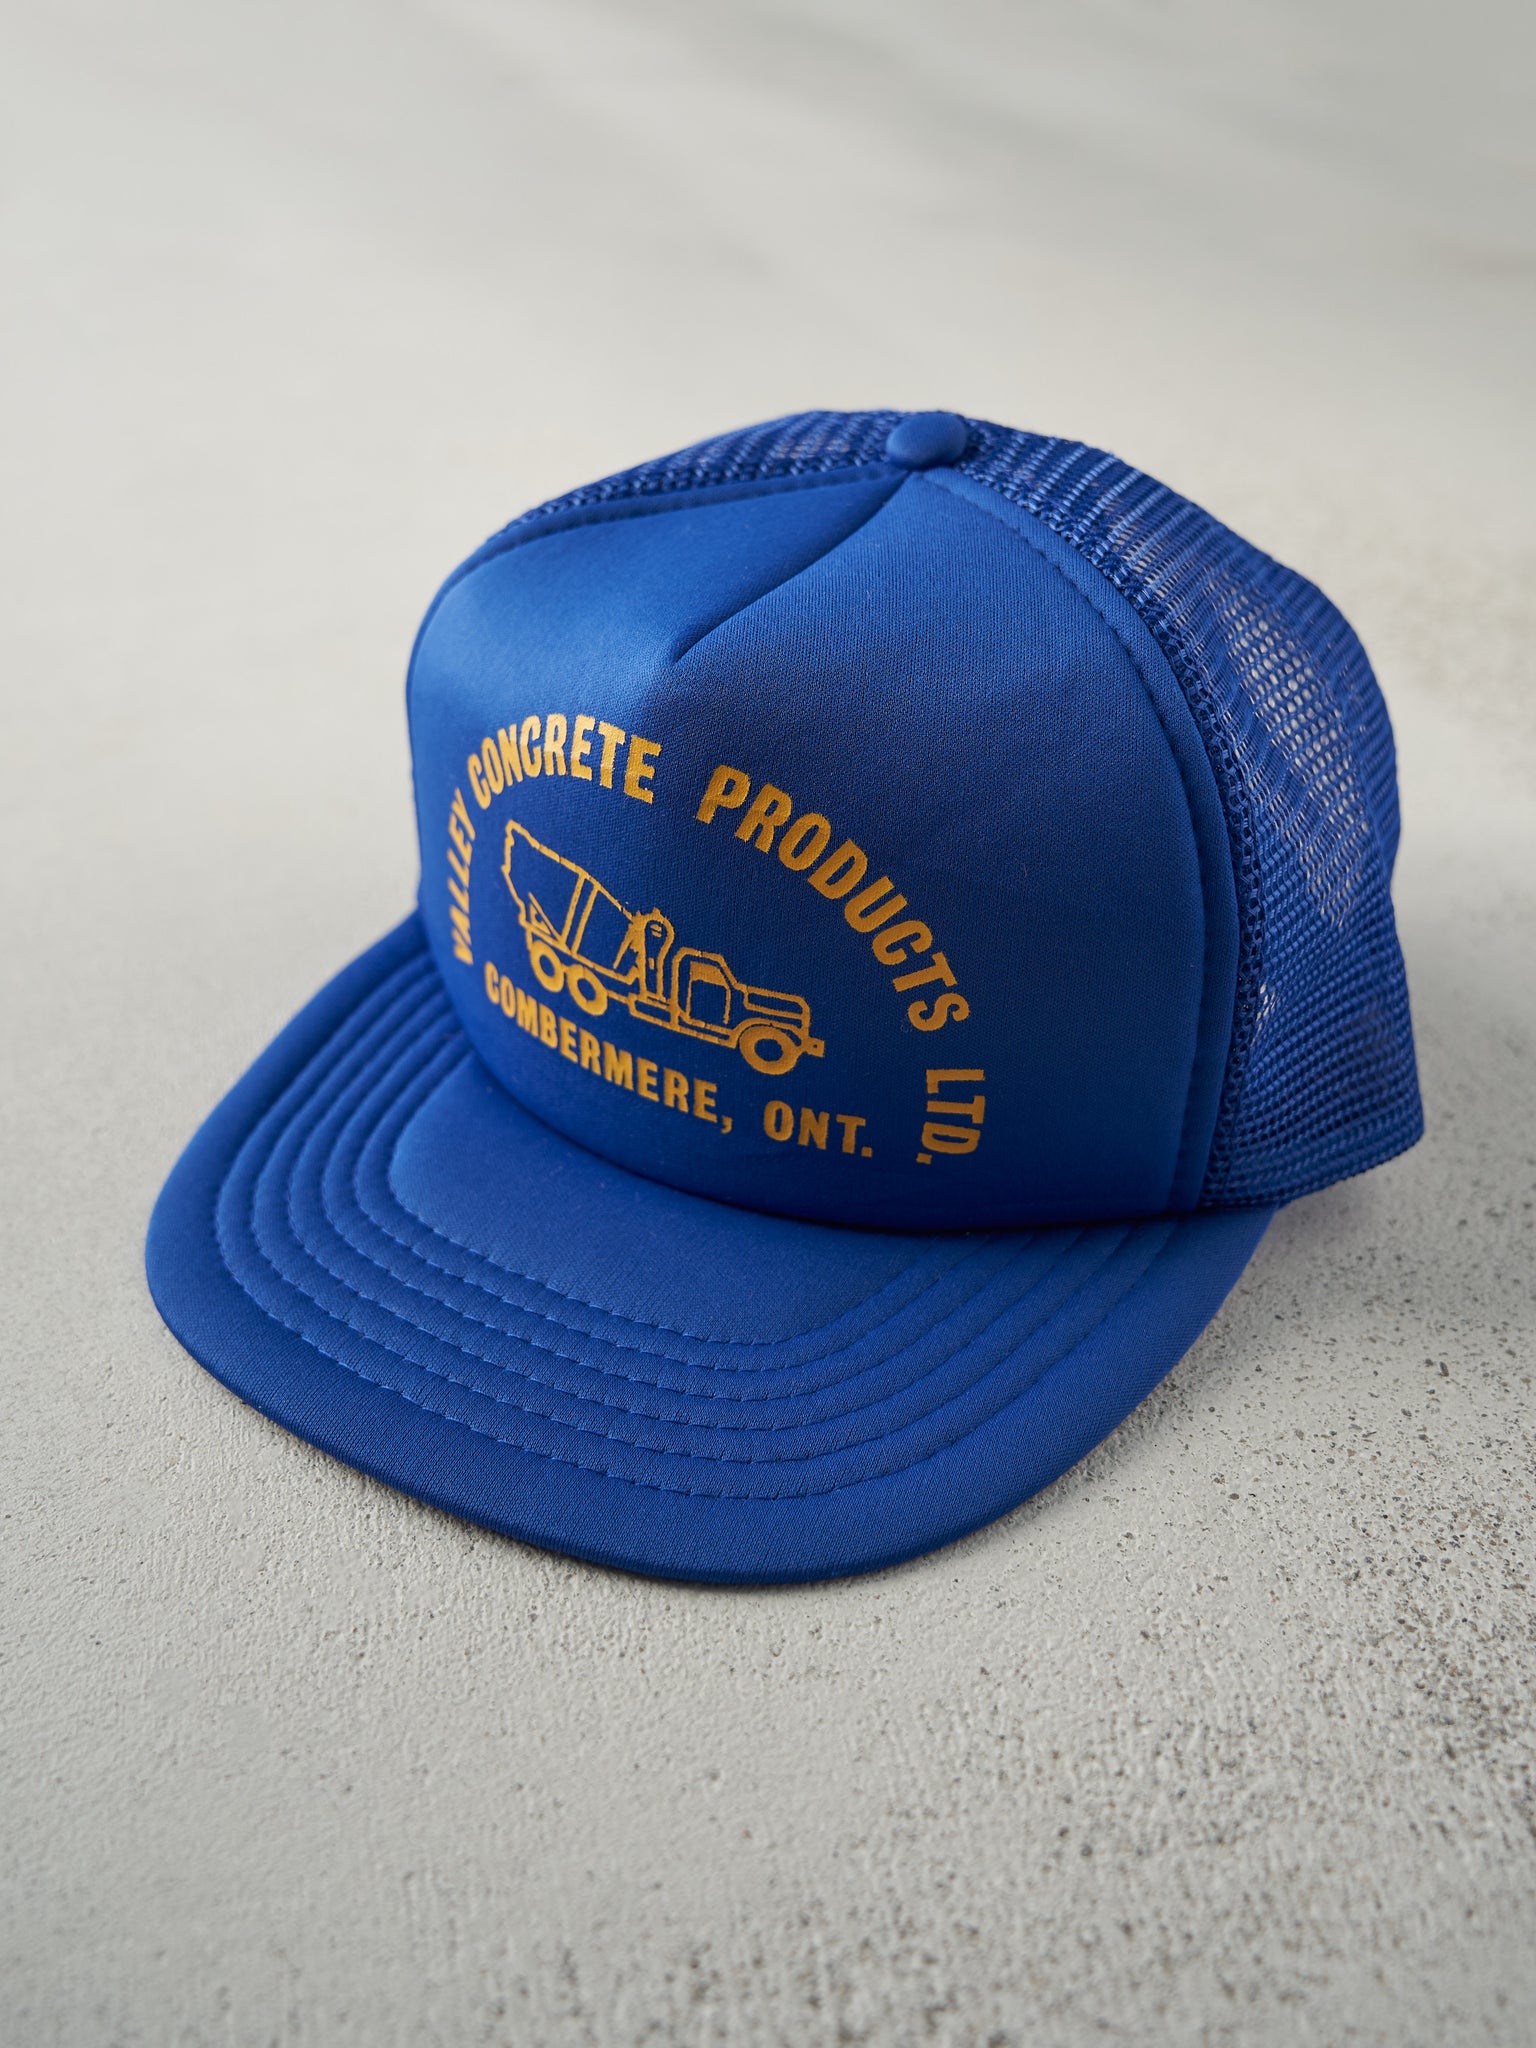 Vintage 80s Blue Valley Concrete Products Foam Trucker Hat